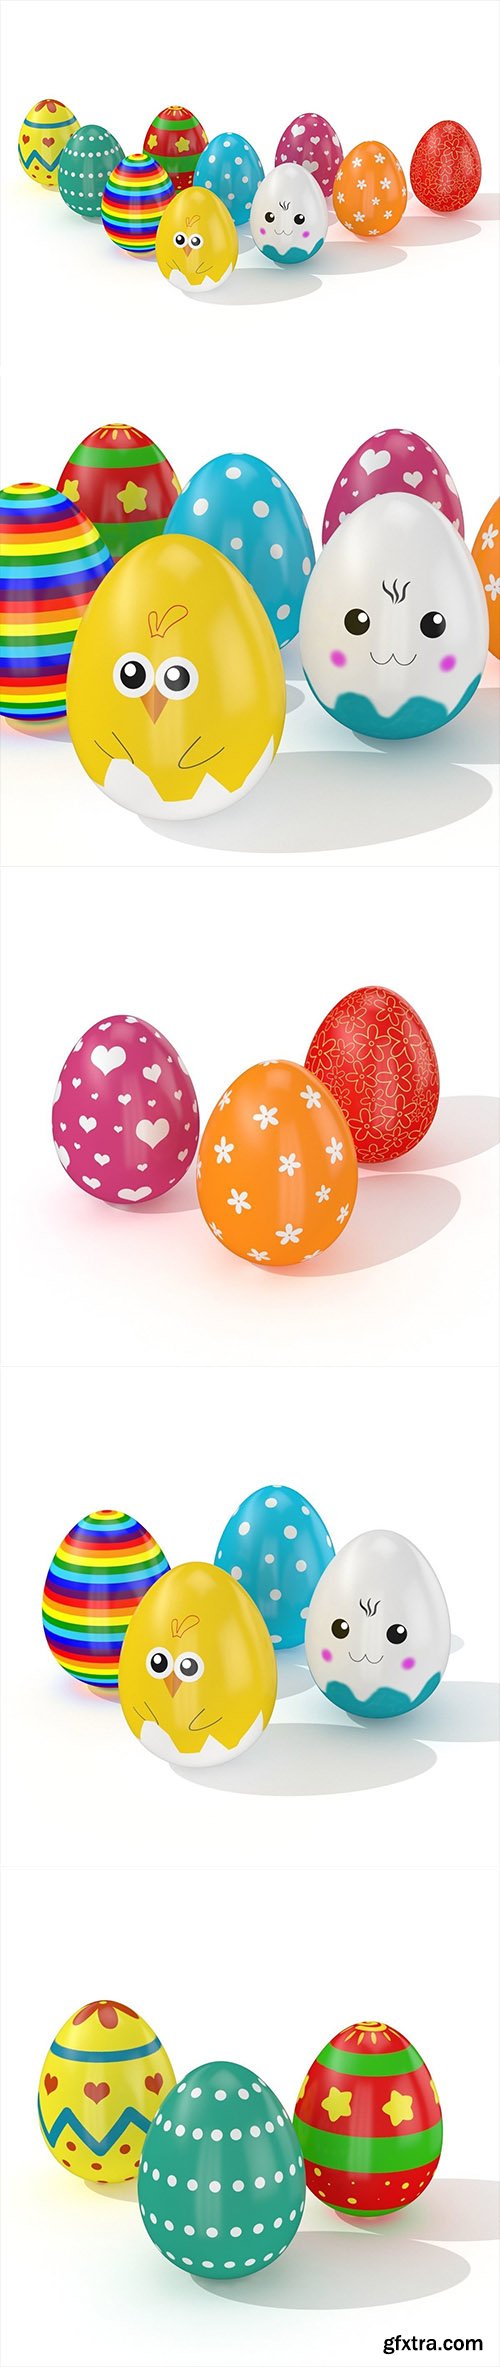 Cgrader - Easter eggs 10 Styles